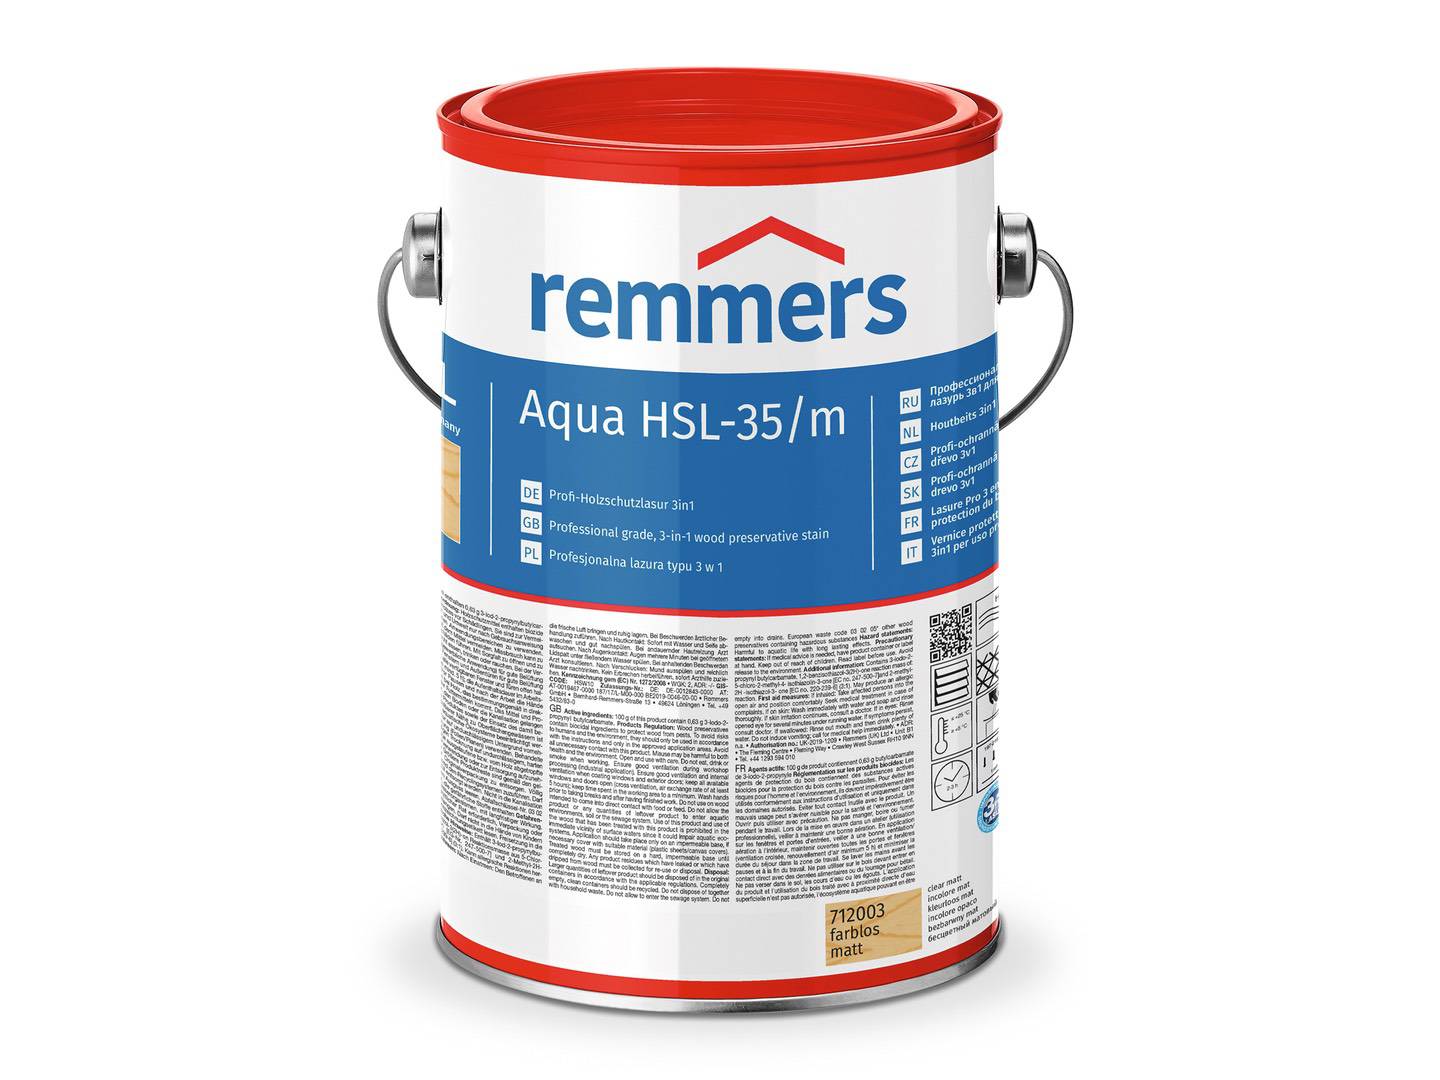 REMMERS Aqua HSL-35/m-Profi-Holzschutz-Lasur 3in1 pinie/lärche (RC-260) 5 l